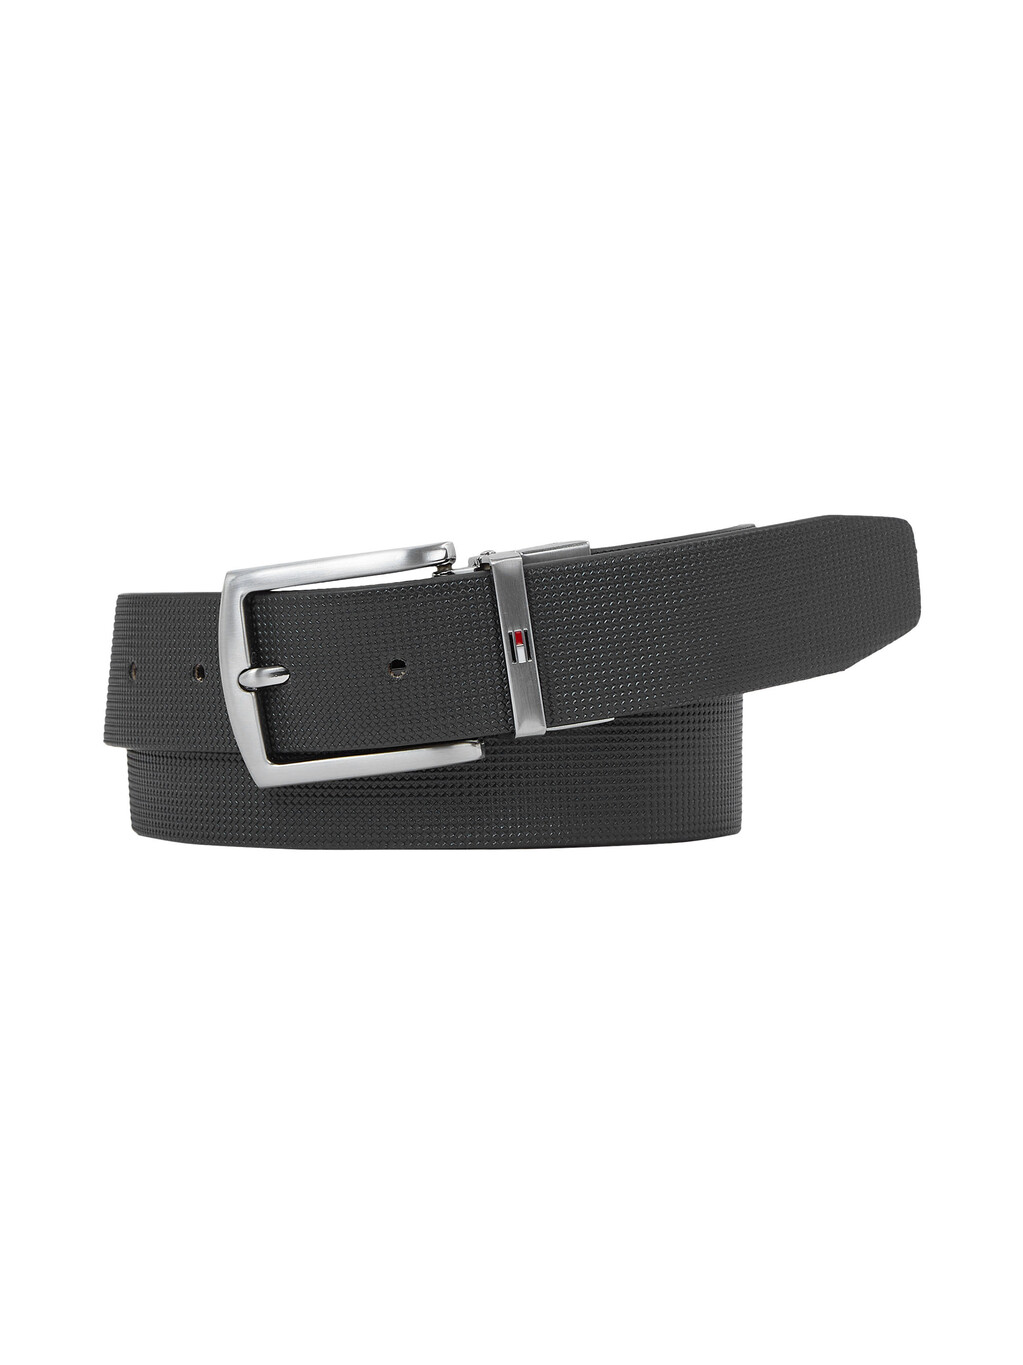 Denton Square Buckle Reversible Leather Belt, Black / Army Green, hi-res